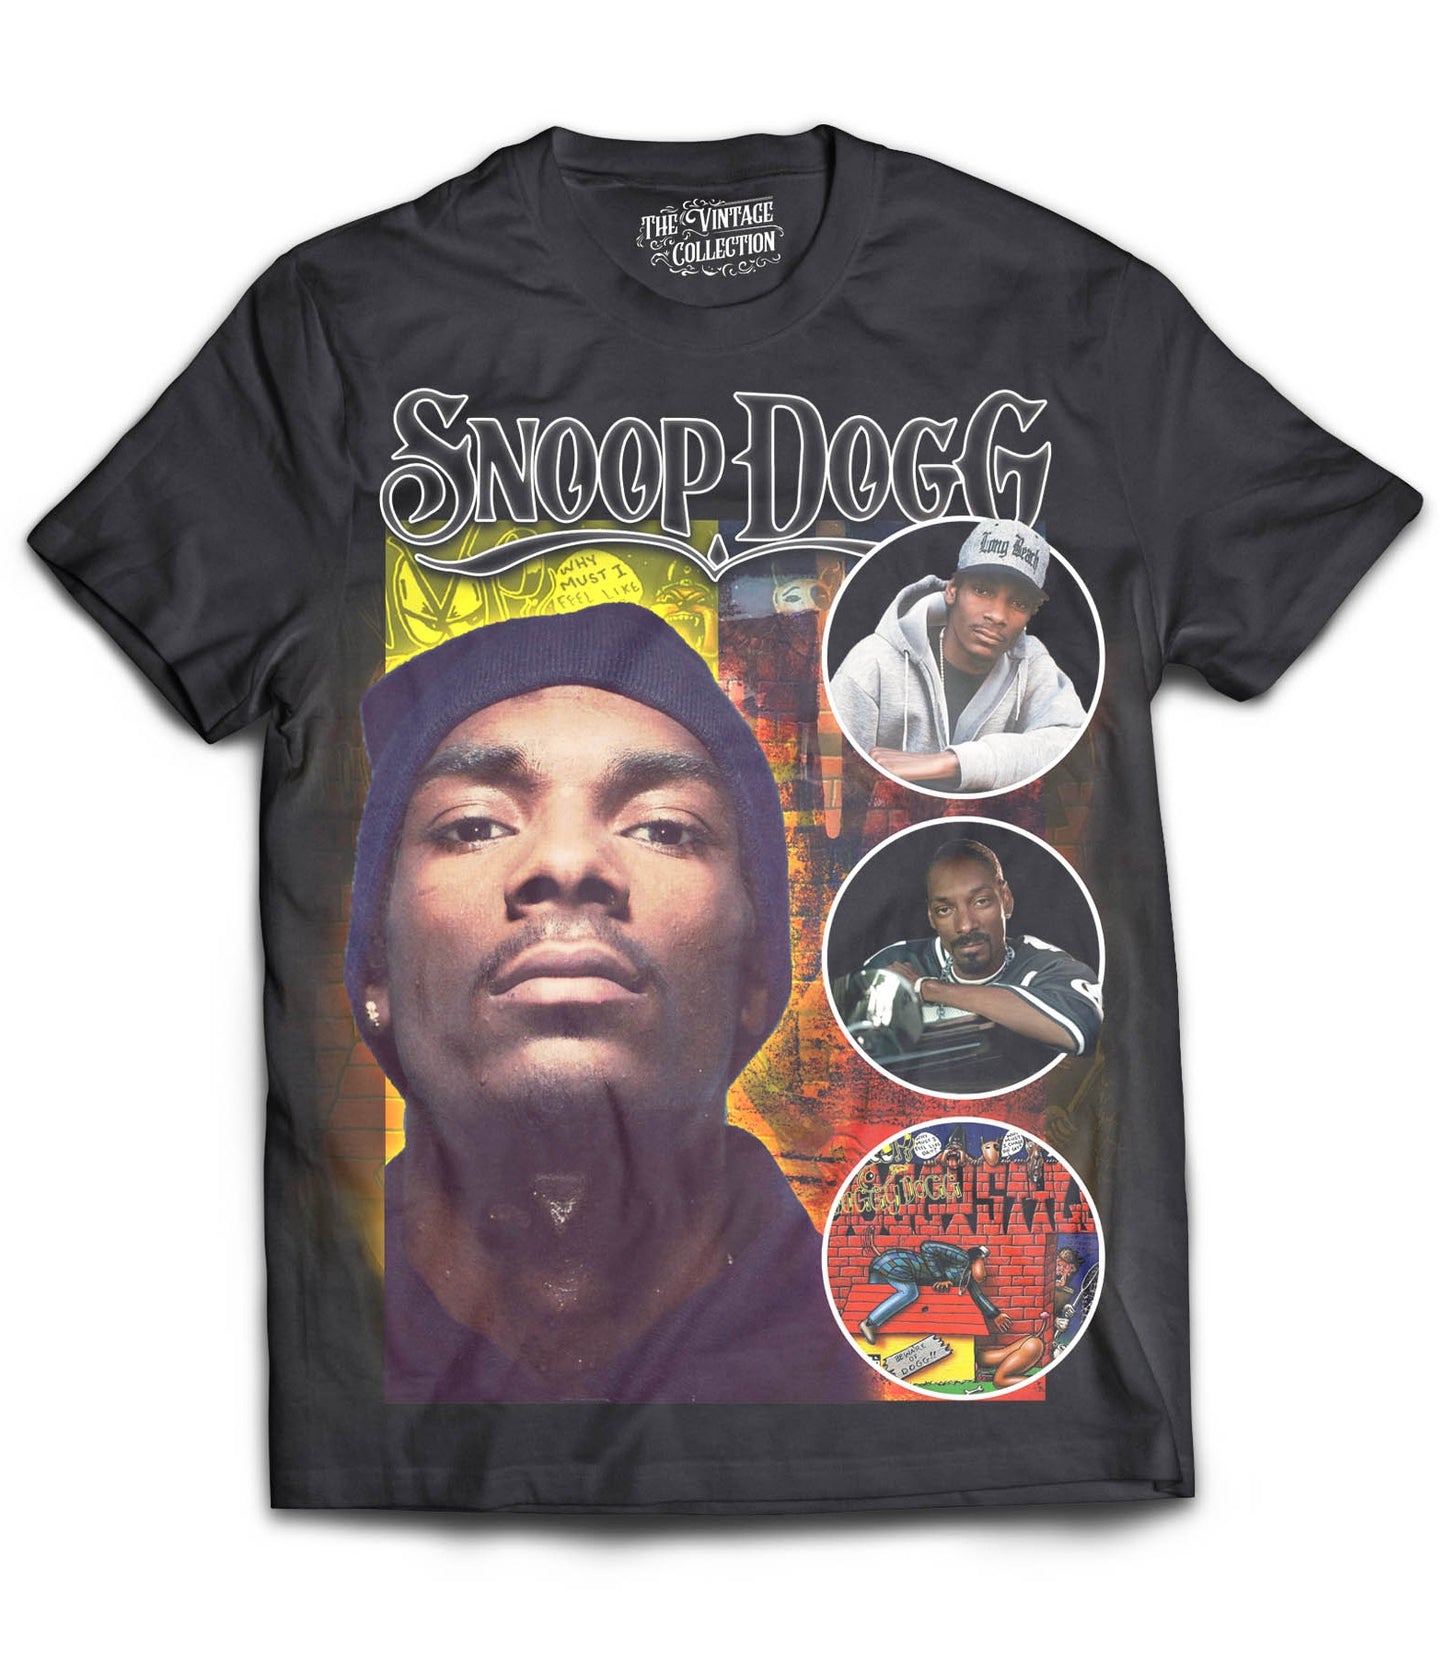 Snoop Dogg Tribute Shirt (Black)